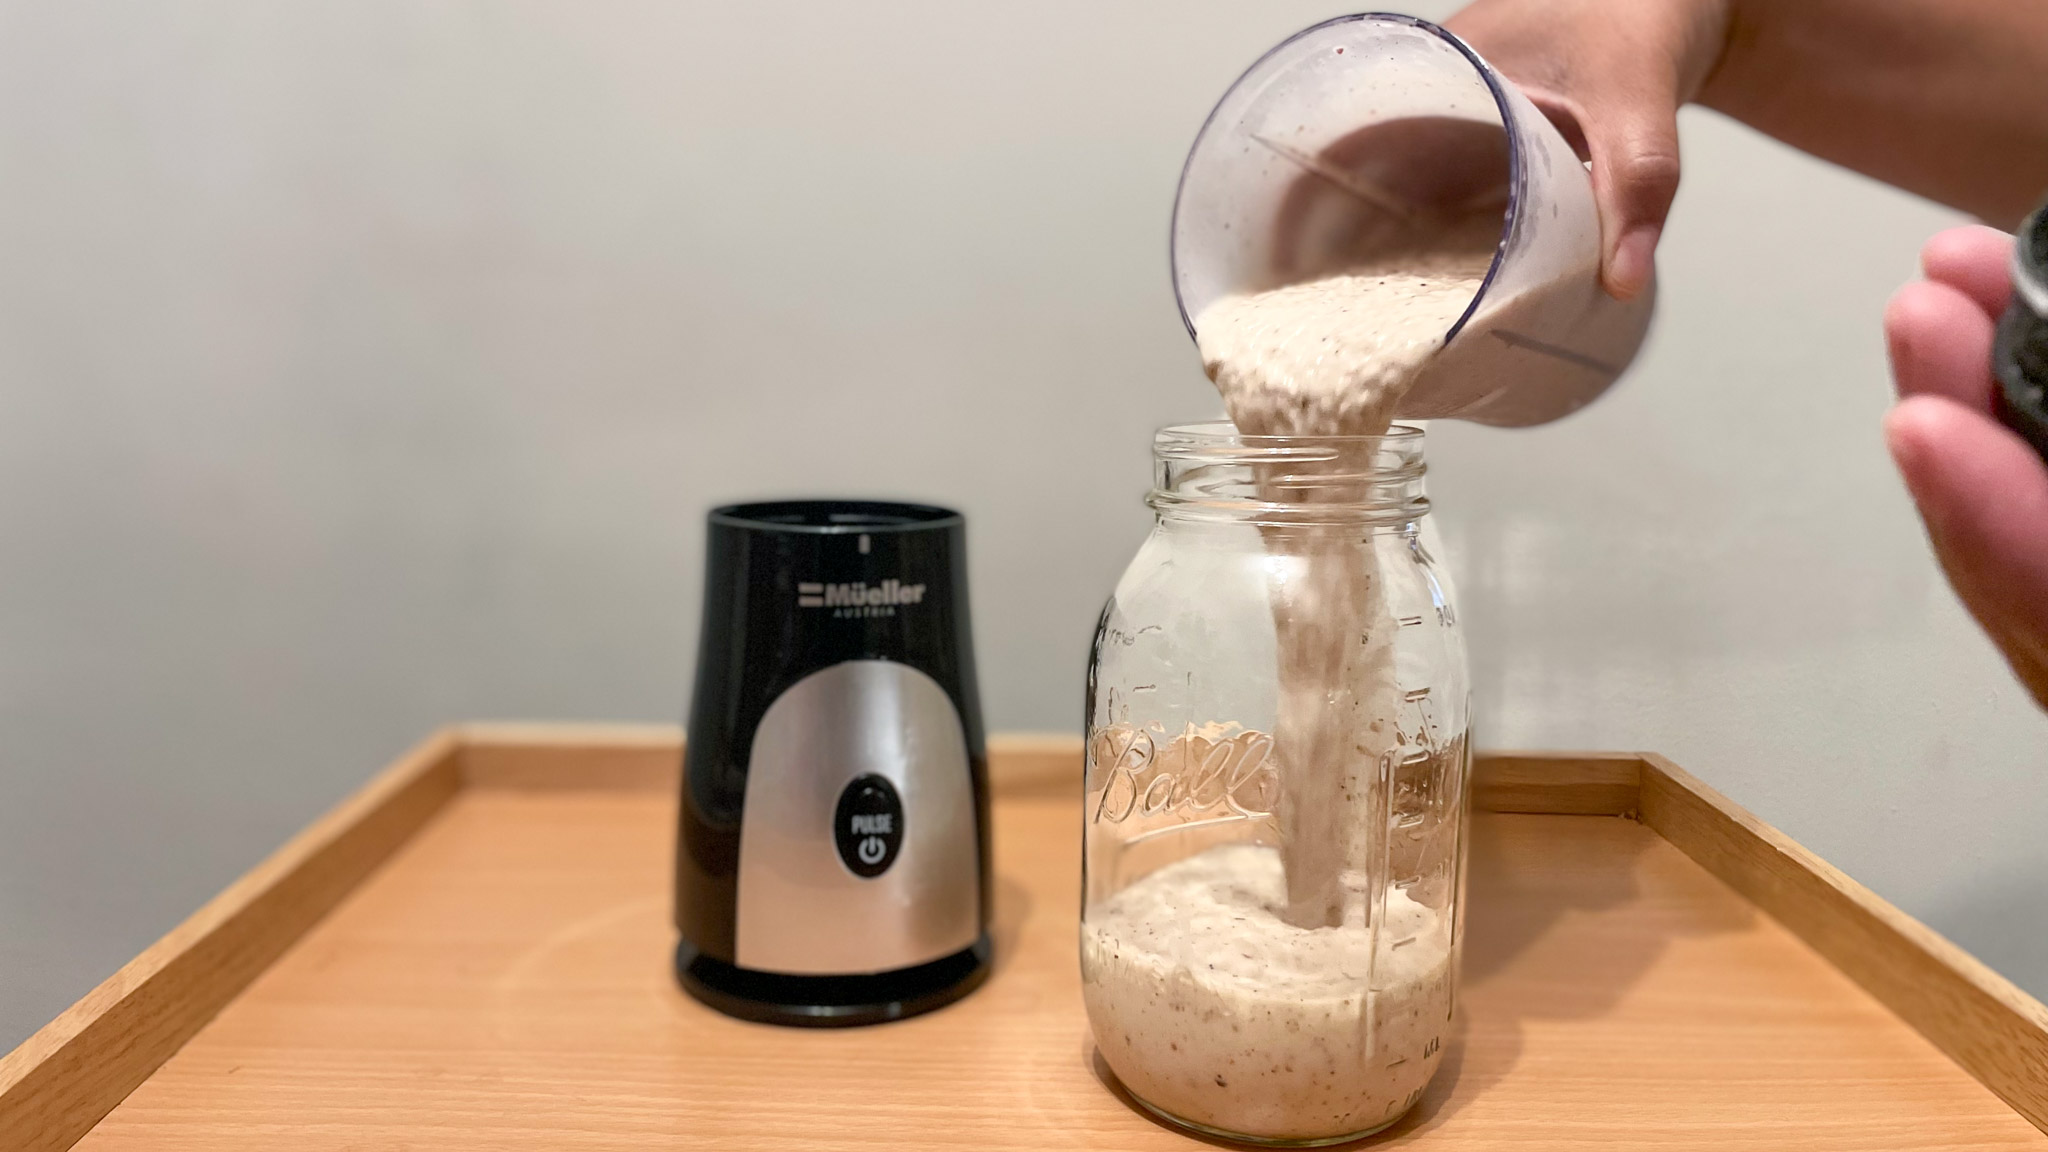 https://www.dontwasteyourmoney.com/wp-content/uploads/2022/04/blenders-for-protein-shakes-mueller-ultra-bullet-portable-blending-jar-blender-for-protein-shakes-pour-review-ub-1.jpg